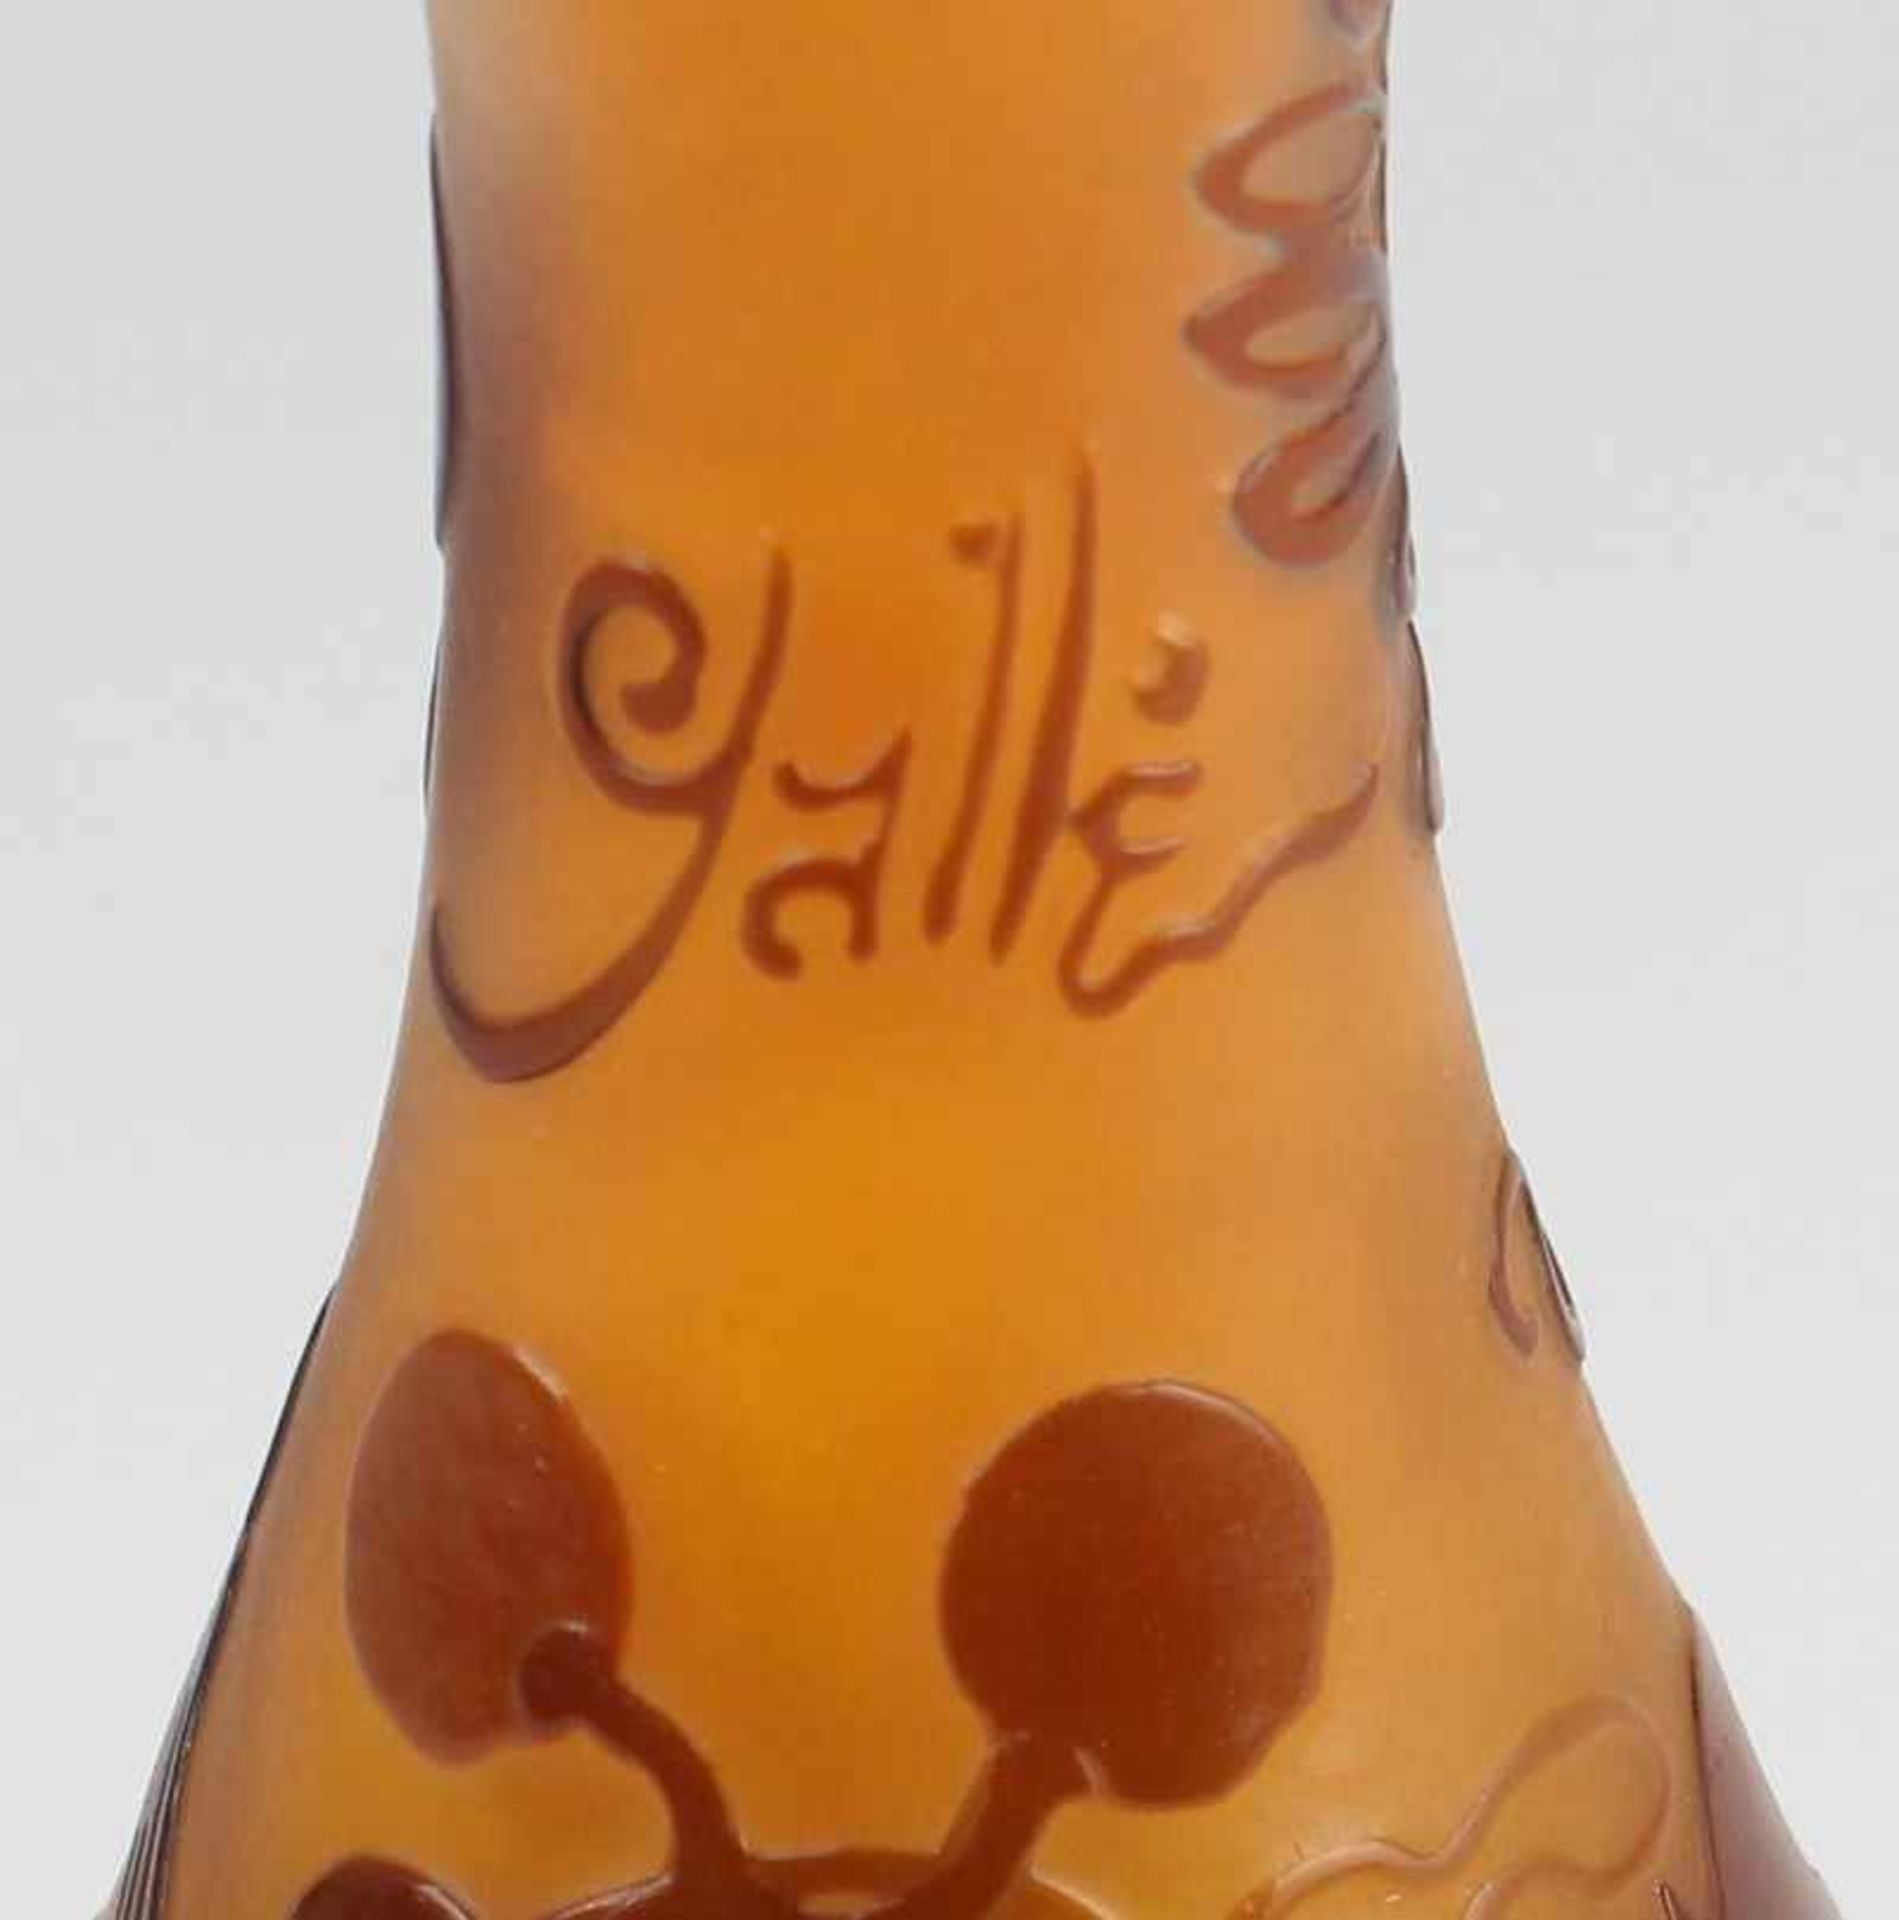 Gallé - Vase um 1900, Jugendstil, Emile Gallé, Frankreich, farbloses Glas, gelborange unterfangen, - Bild 2 aus 5